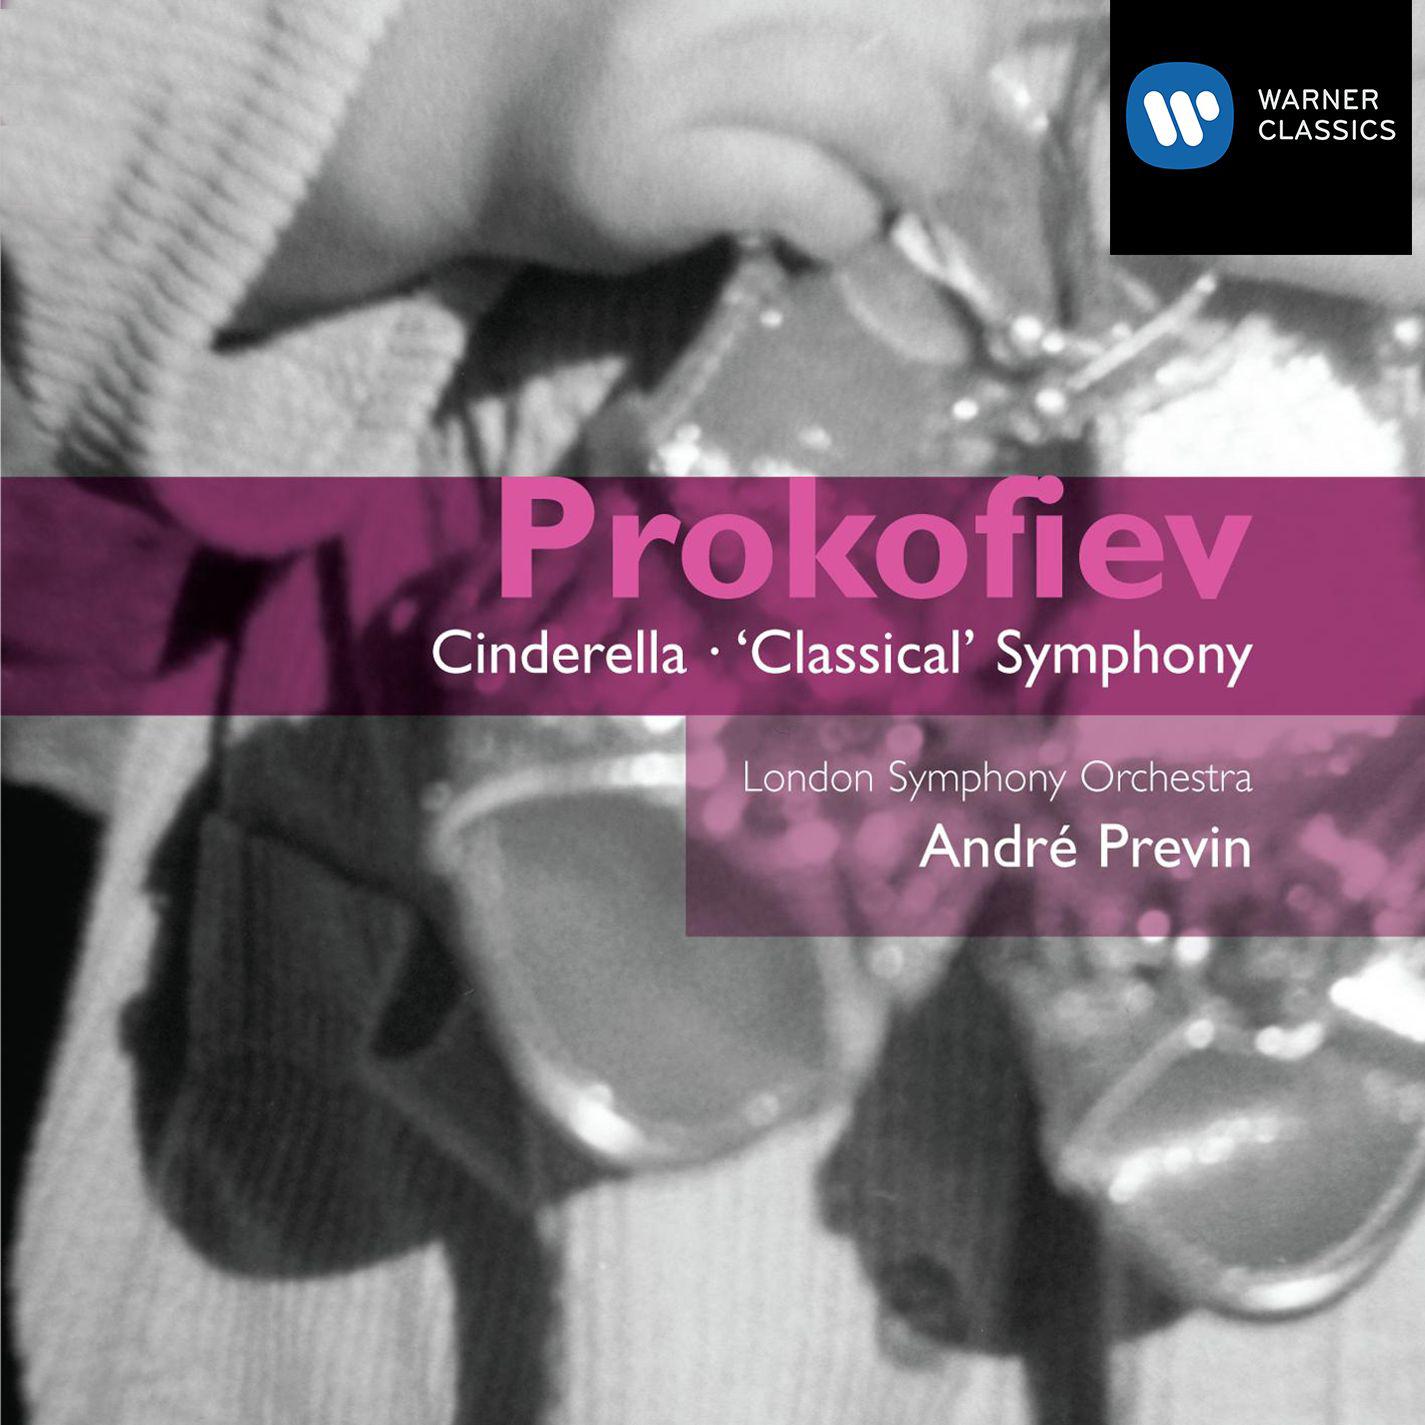 Prokofiev: Cinderella - 'Classical' Symphony